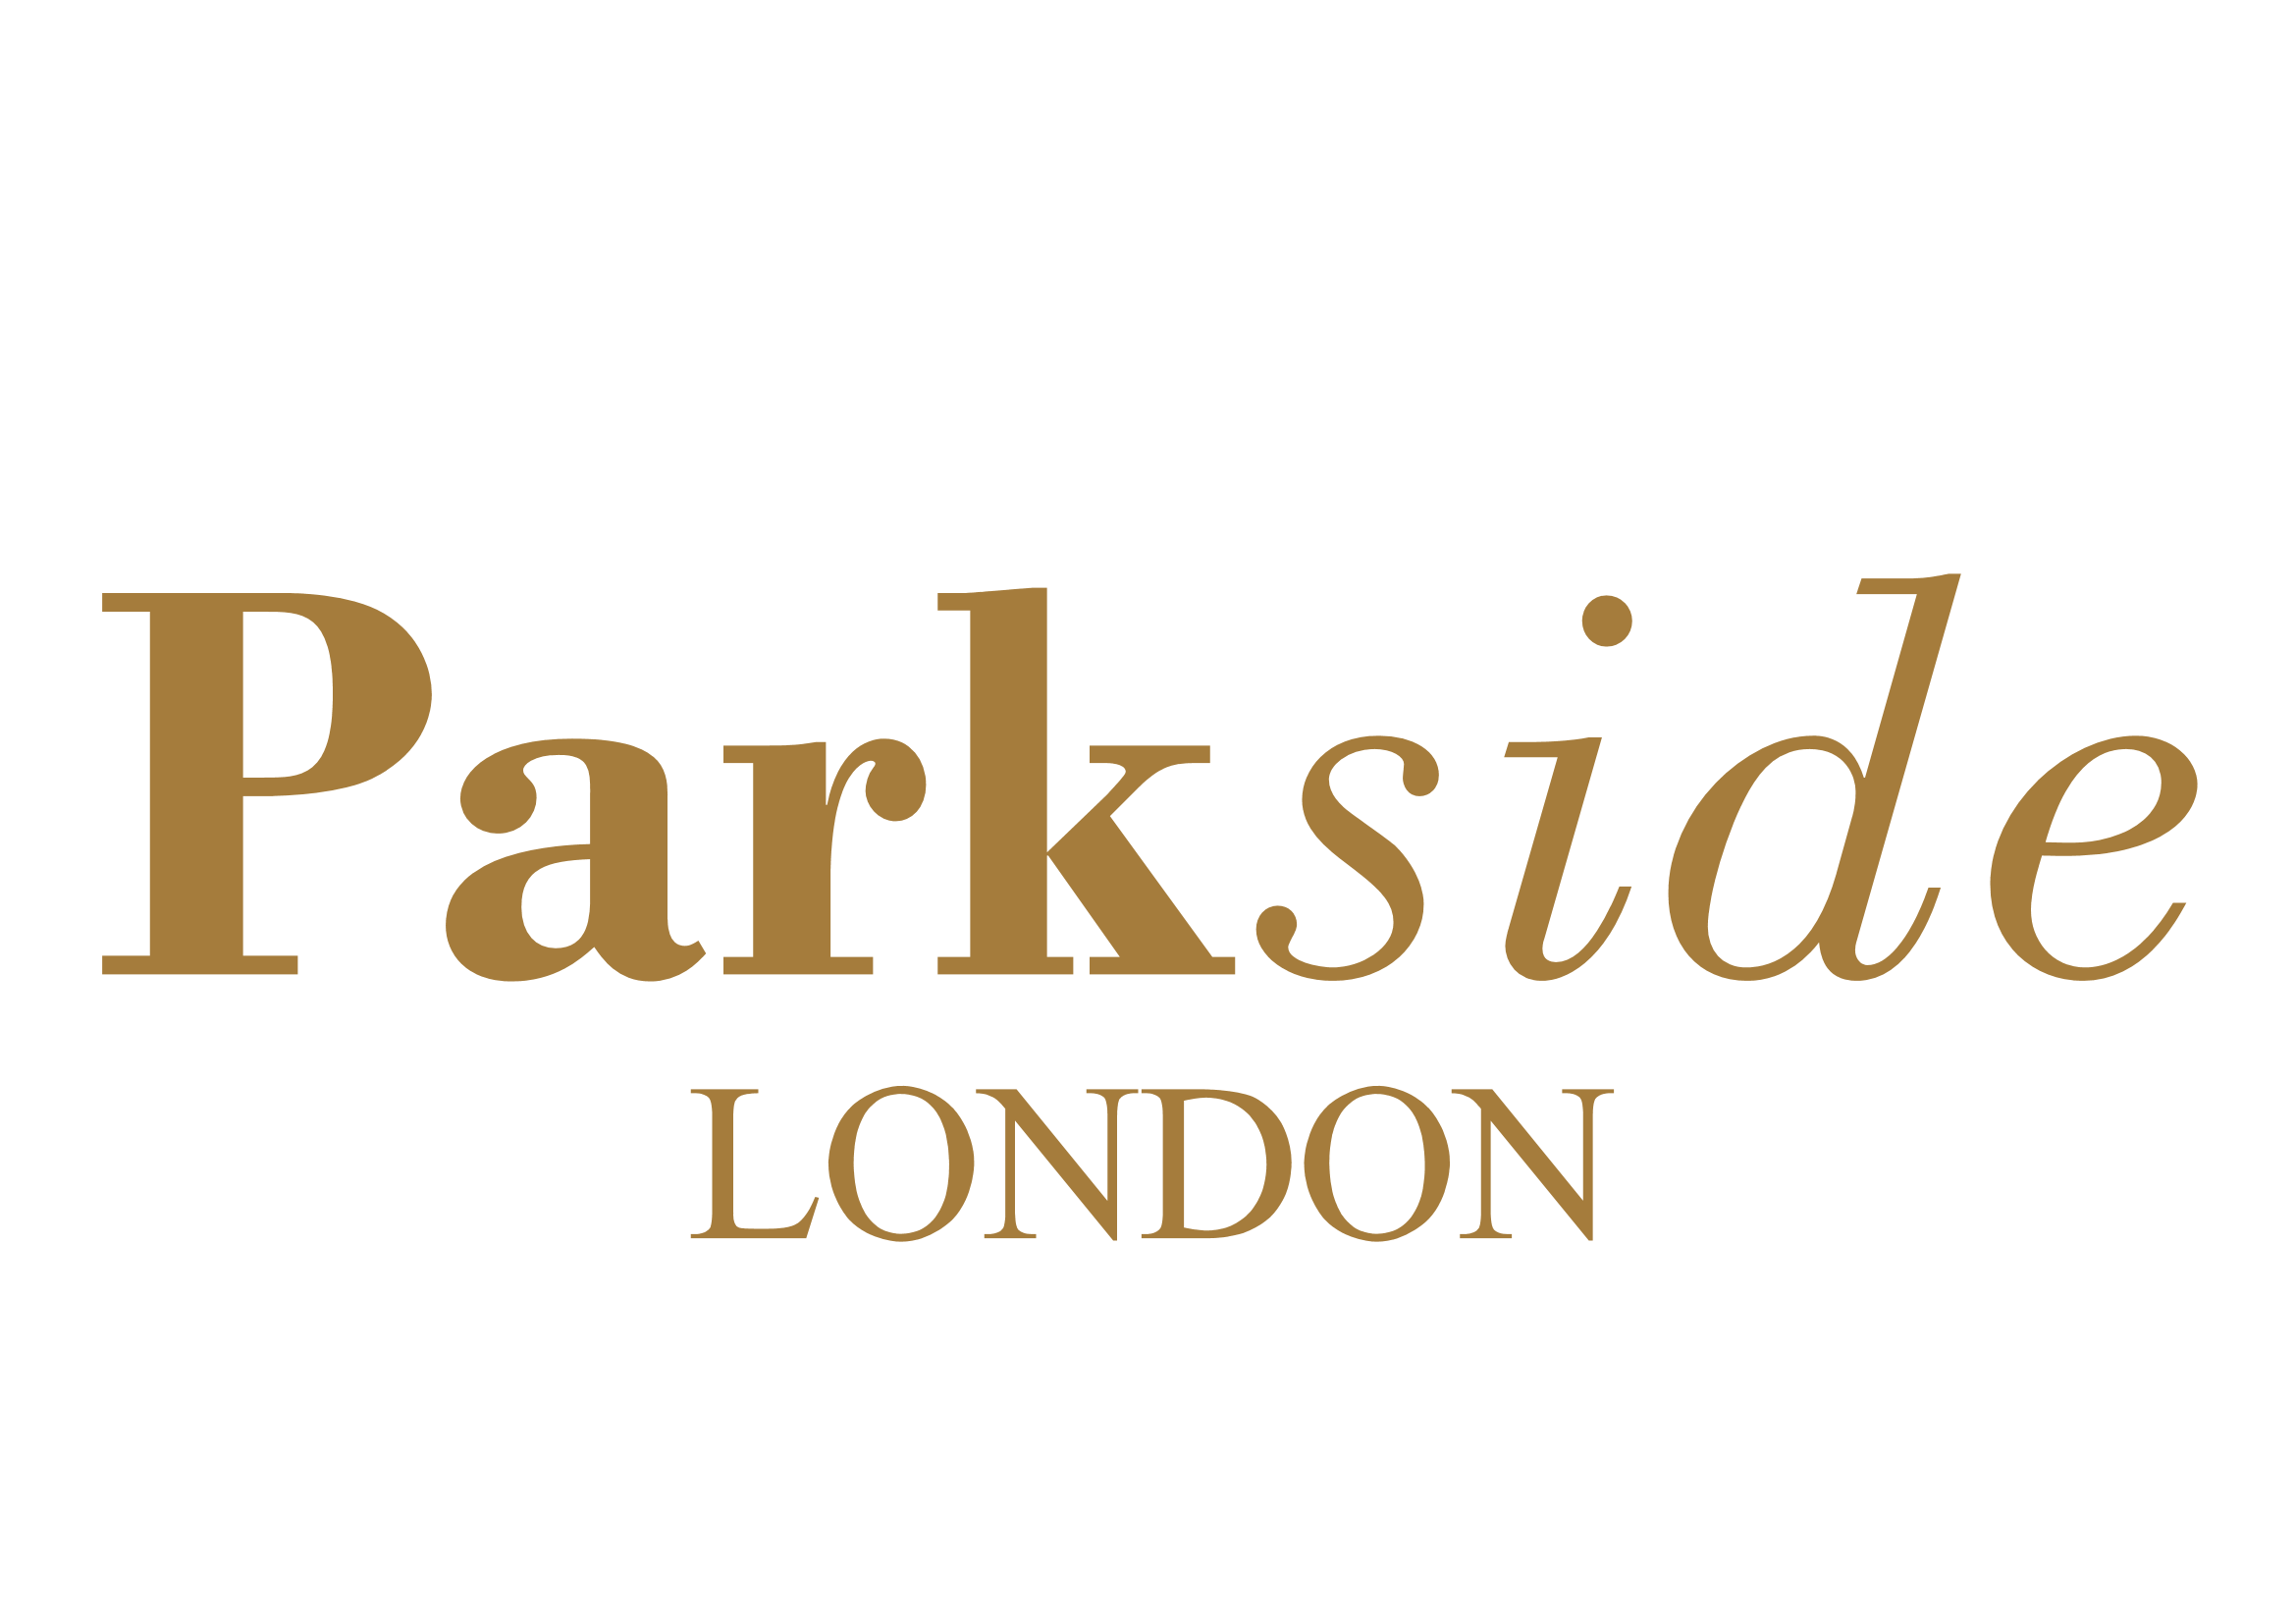 Parkside London